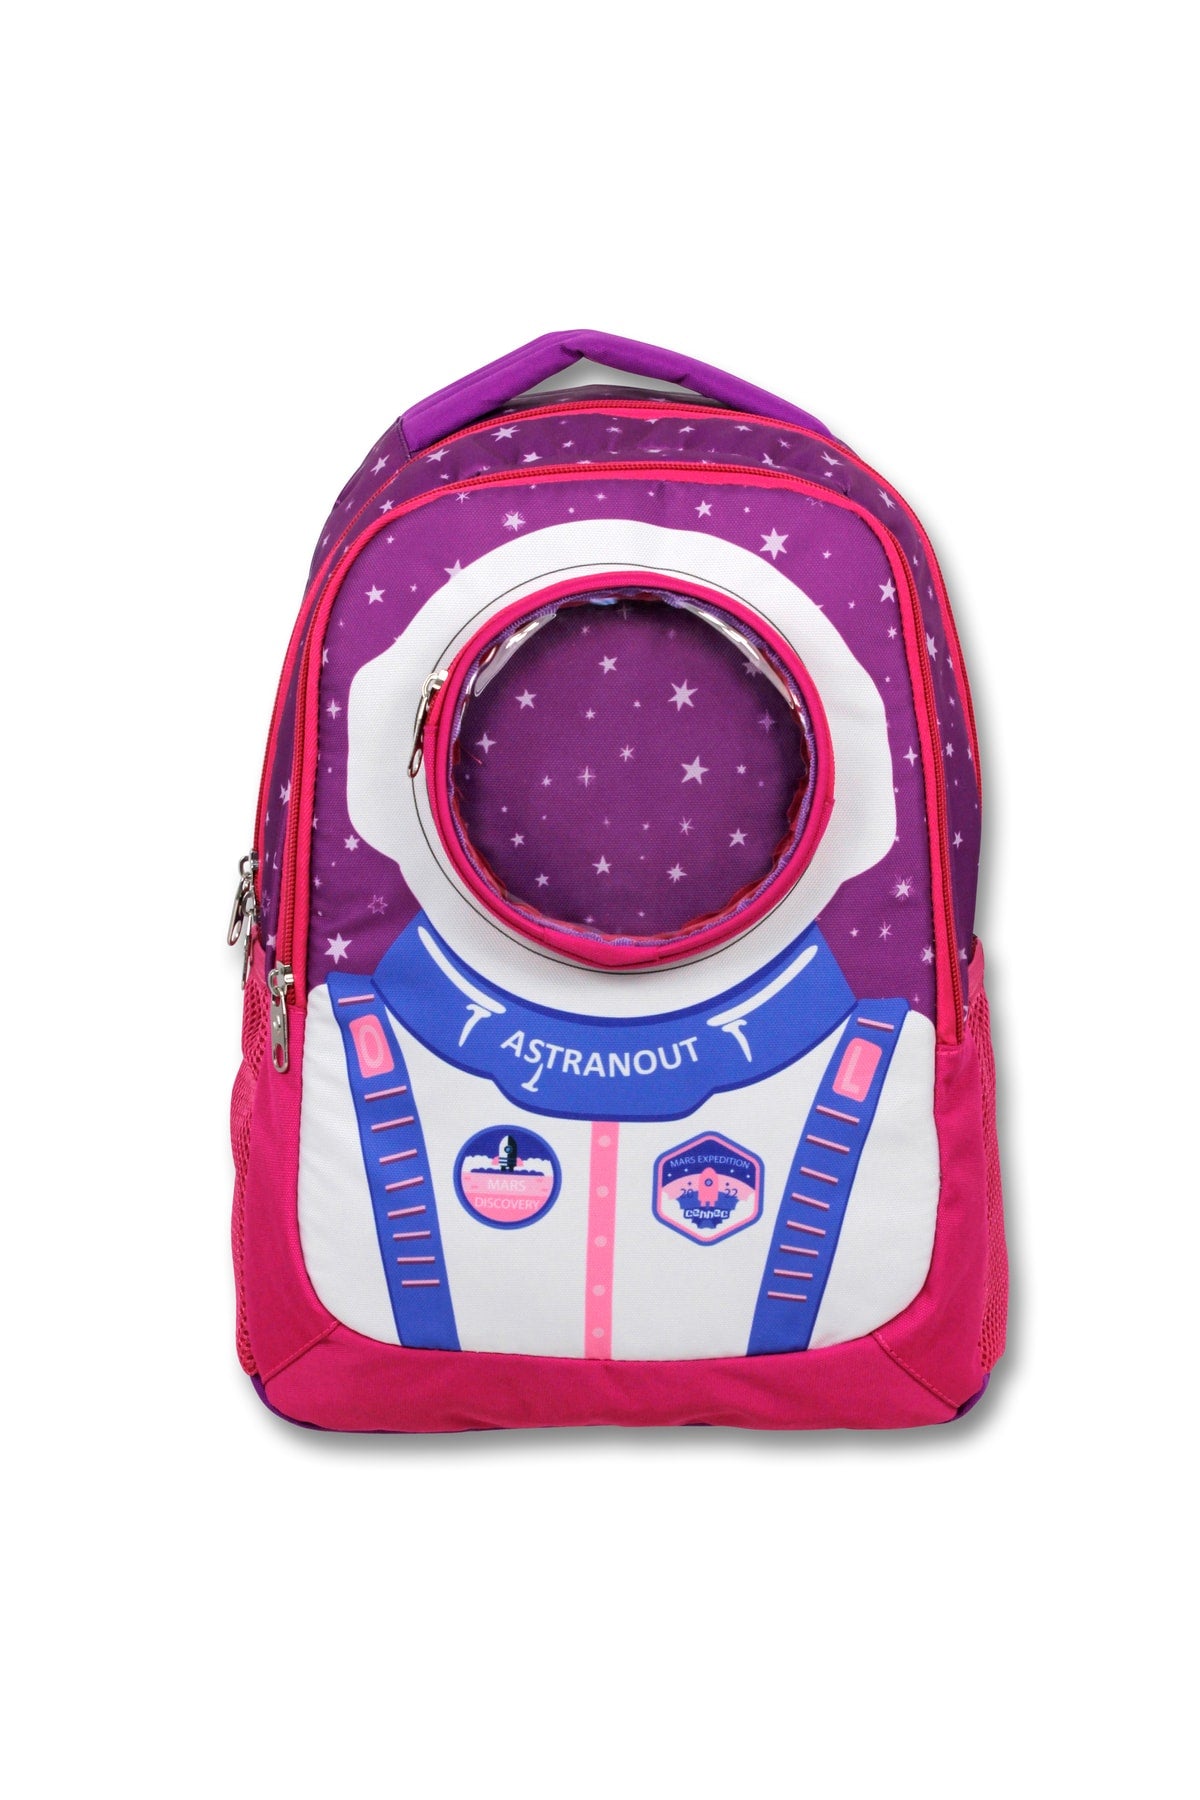 -Umit Bag Licensed Girl Astronaut School Backpack -Nutrition And Pencil Bag Set